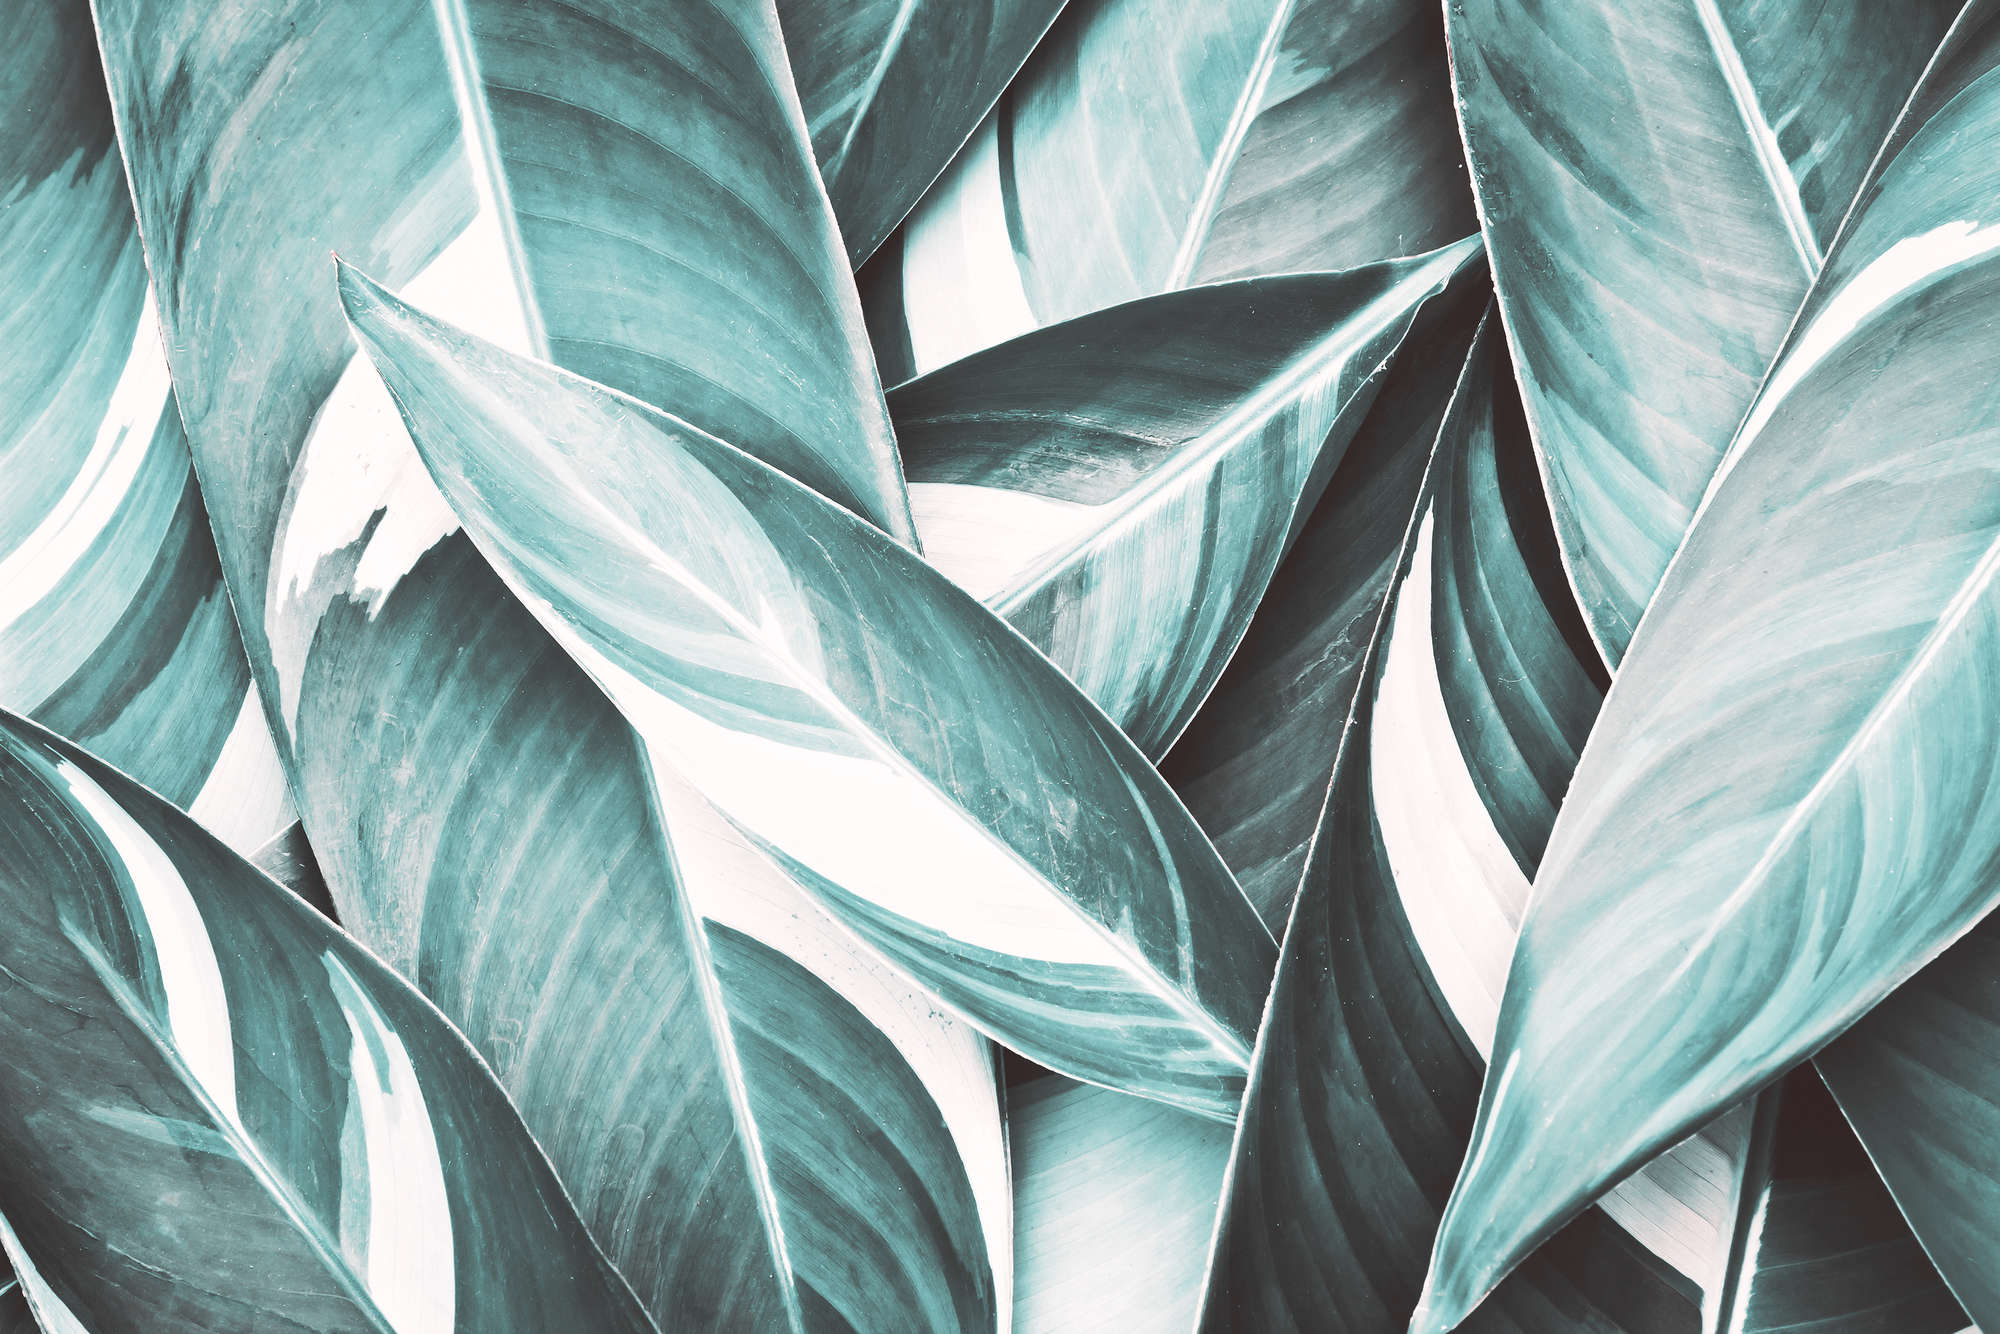             Carta da parati natura motivo foglie di palma grigio su tessuto non tessuto liscio premium
        